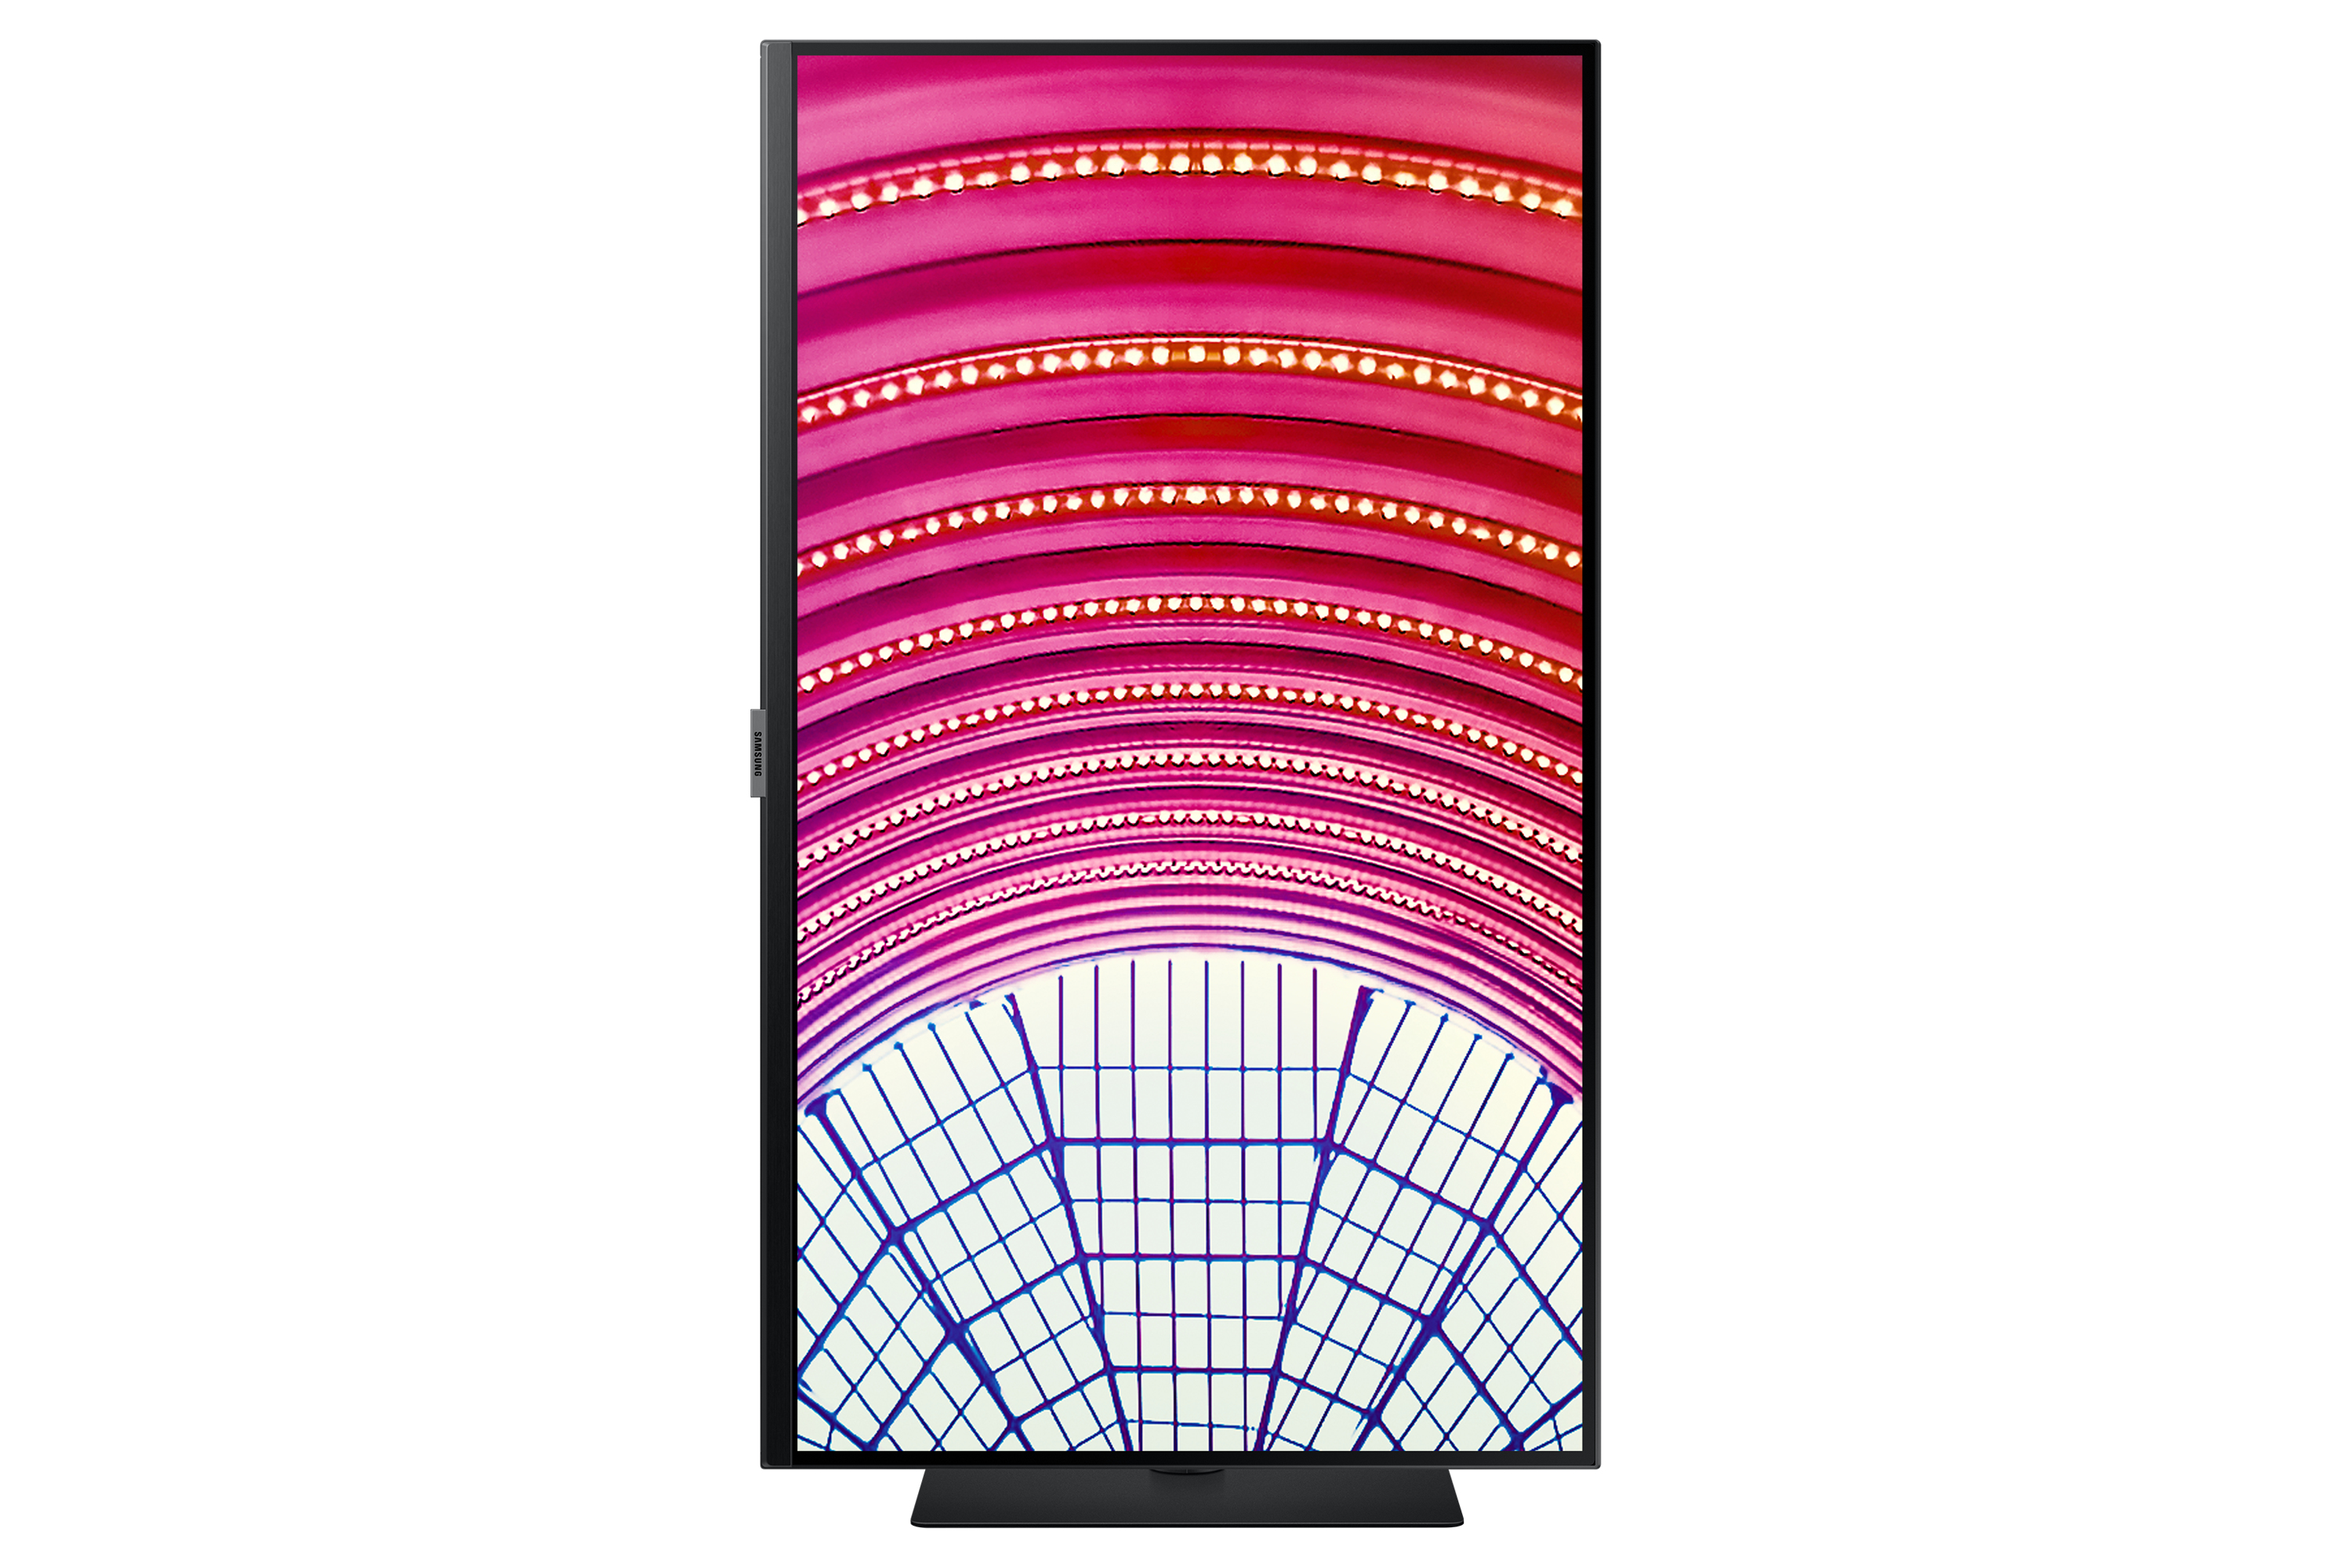 Samsung S32A600NWU - 32 Zoll - 2560 x 1440 Pixel - QHD - LED-Monitor